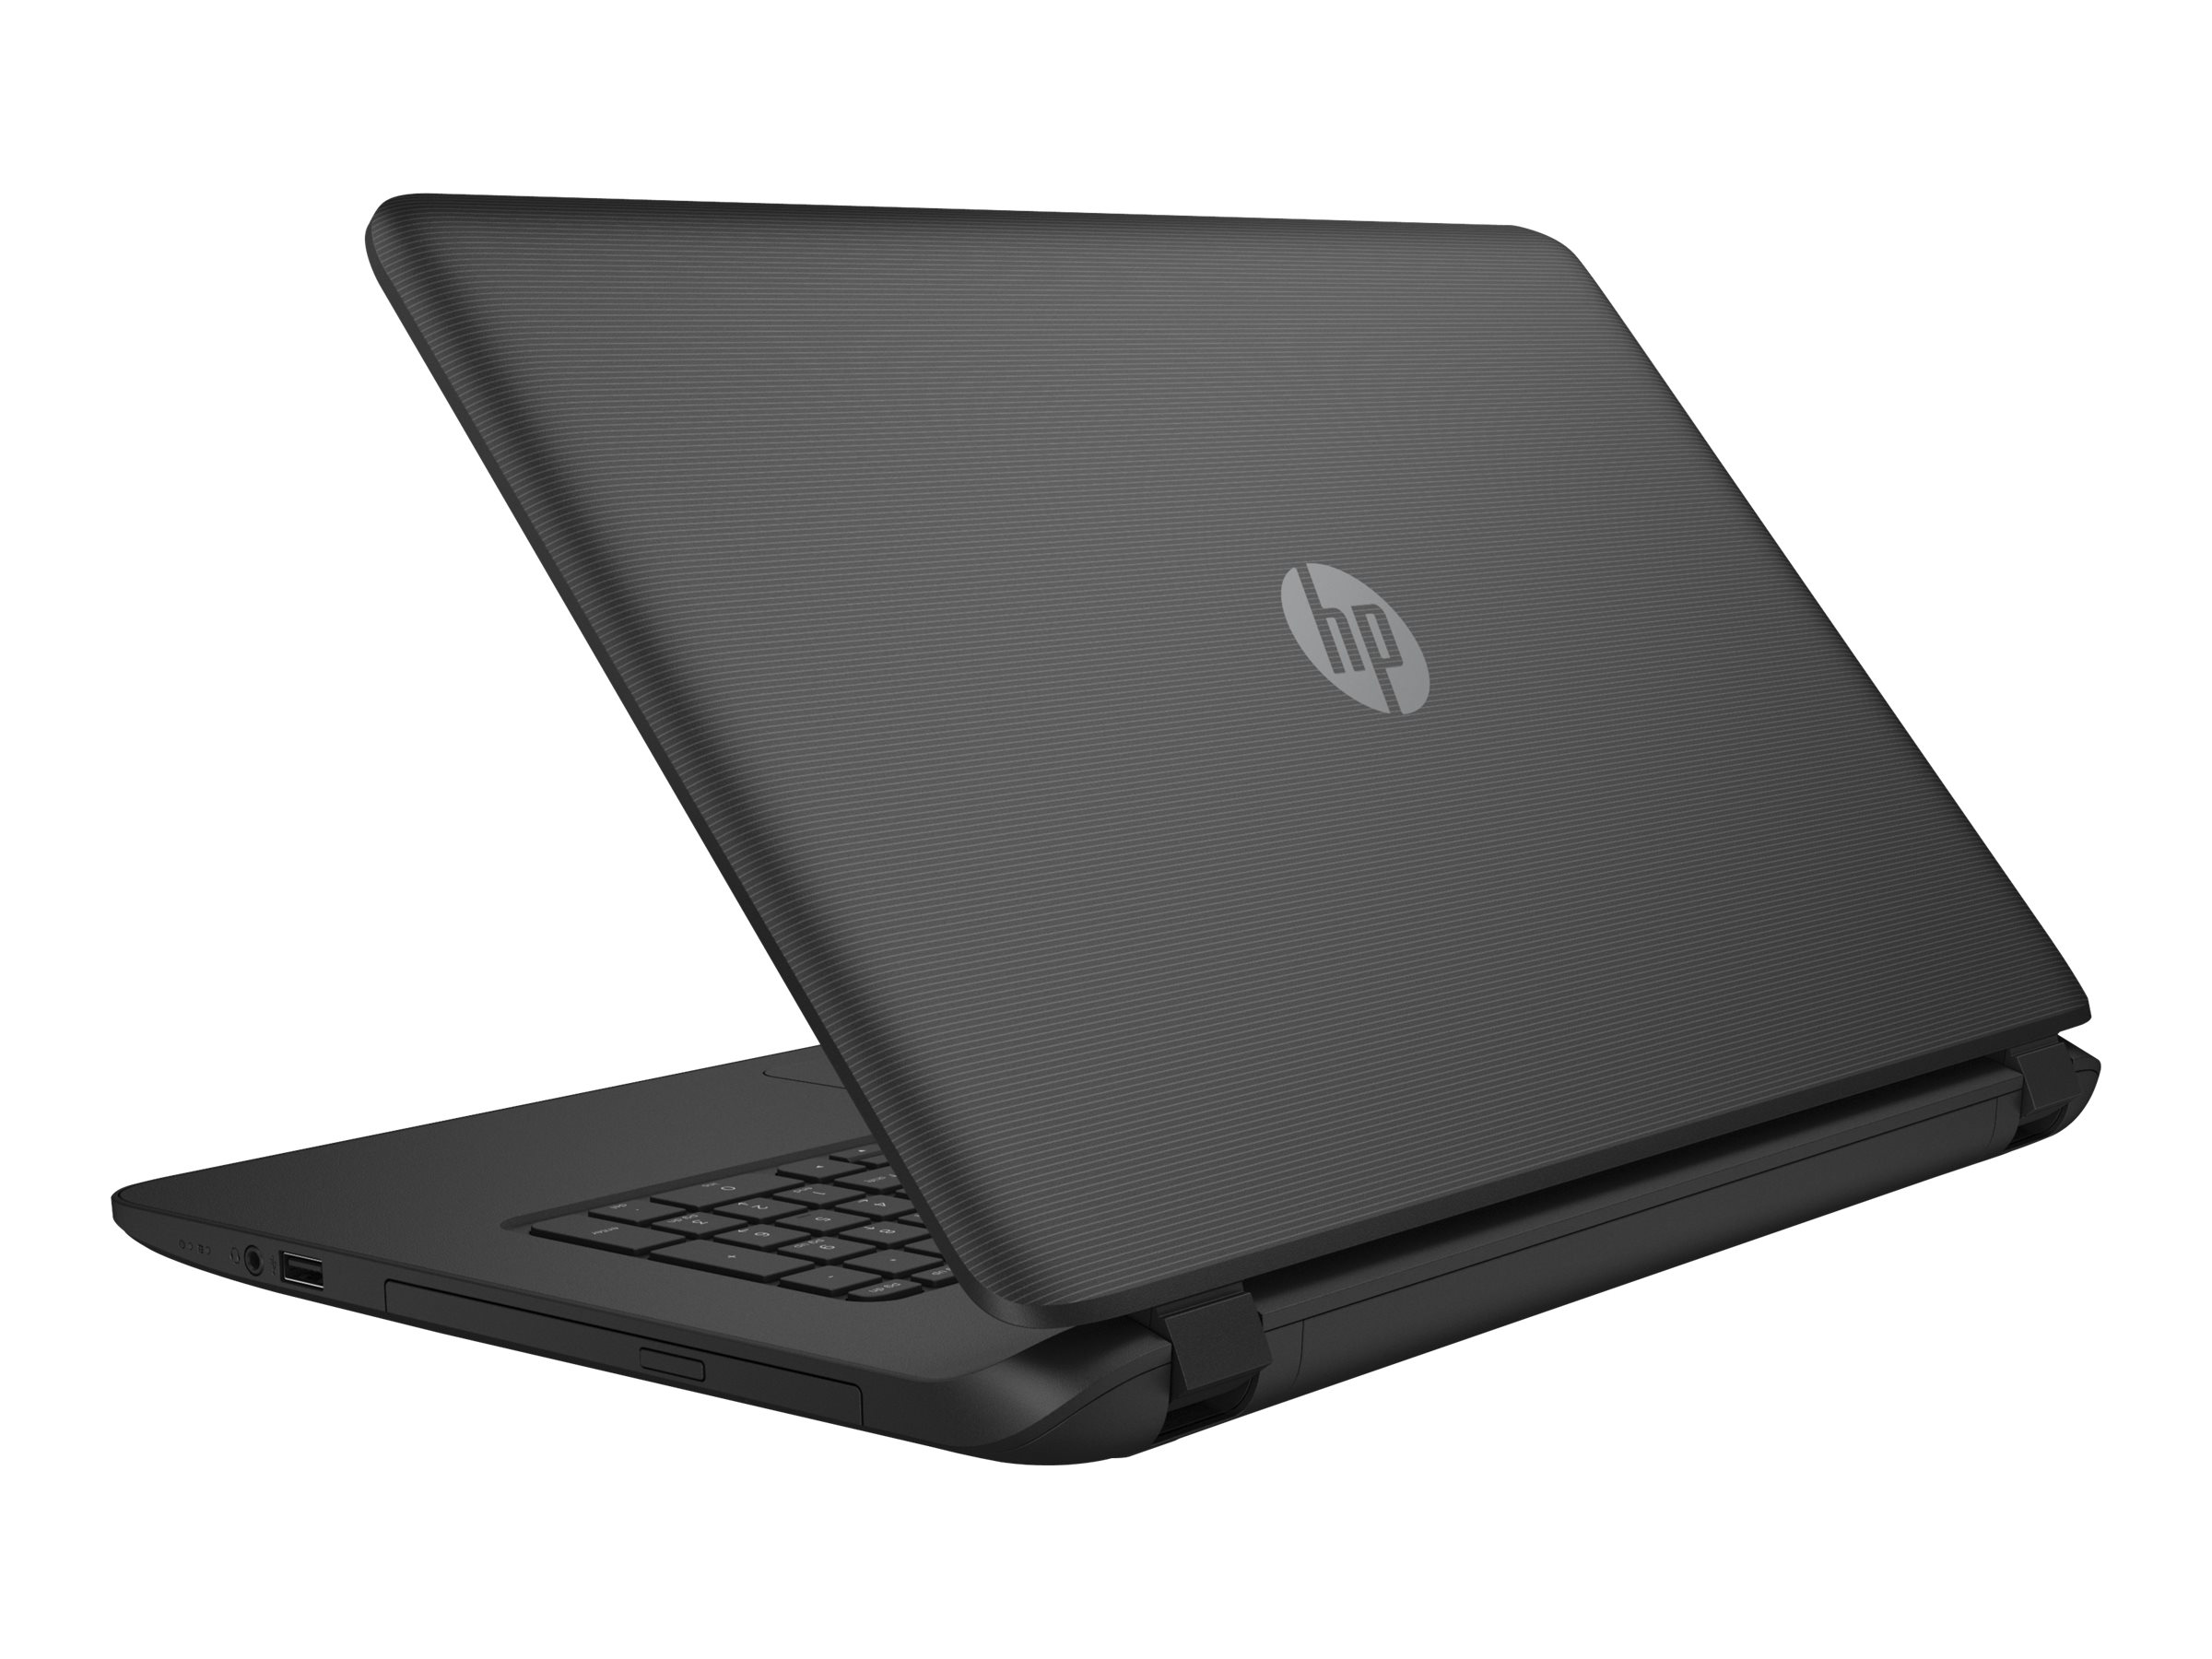 HP Laptop 17-p121wm - AMD A6 - 6310 / up to 2.4 GHz - Win 10 Home 64-bit - Radeon R4 - 4 GB RAM - 500 GB HDD - DVD SuperMulti - 17.3" 1600 x 900 (HD+) - HP textured linear pattern in black - kbd: US - image 5 of 5